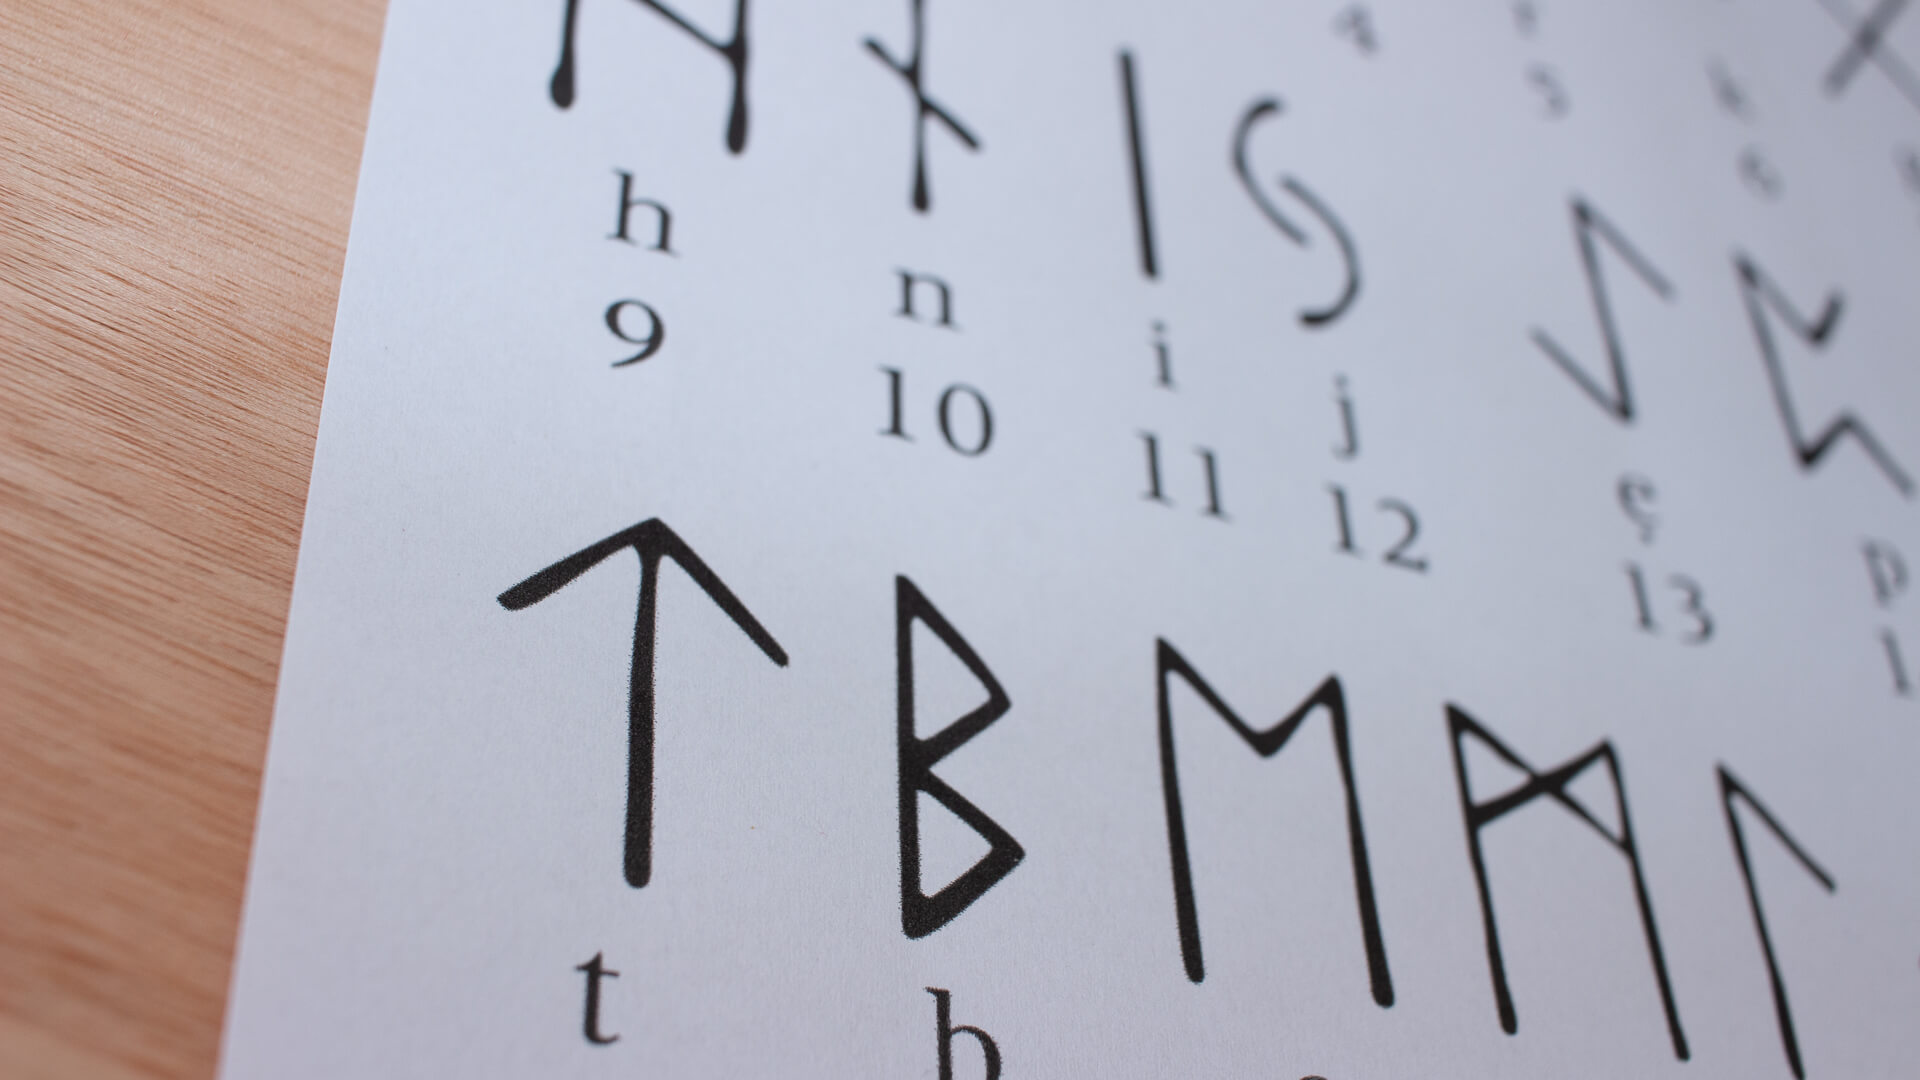 Rune alphabet as inspiration source.